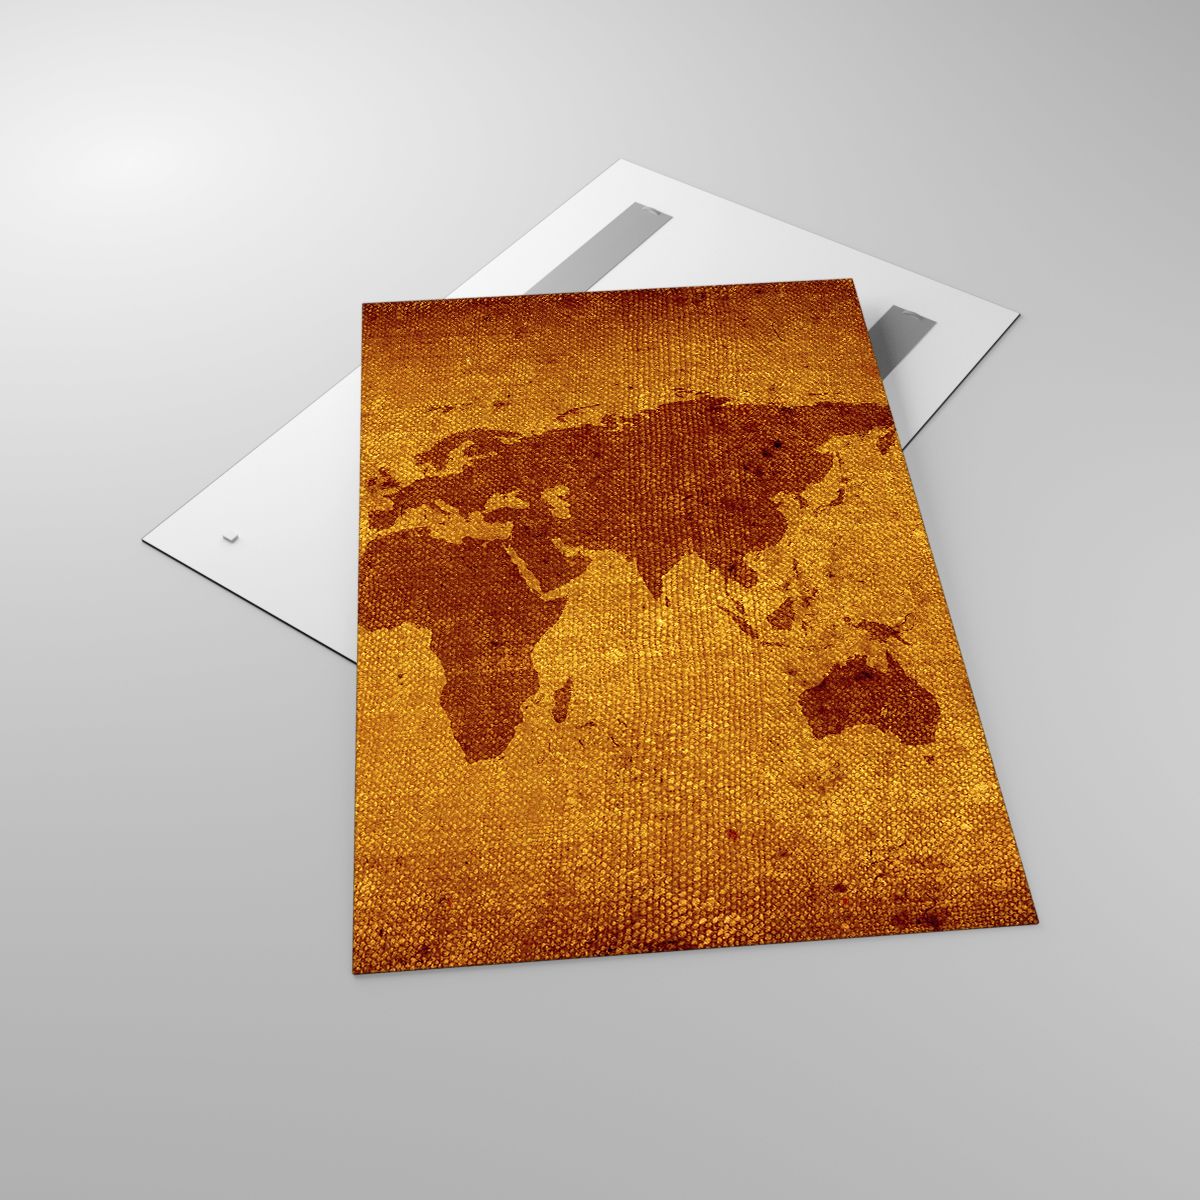 Glasbild Weltkarten, Glasbild Kontinente, Glasbild Reisen, Glasbild Geschichte, Glasbild Jahrgang